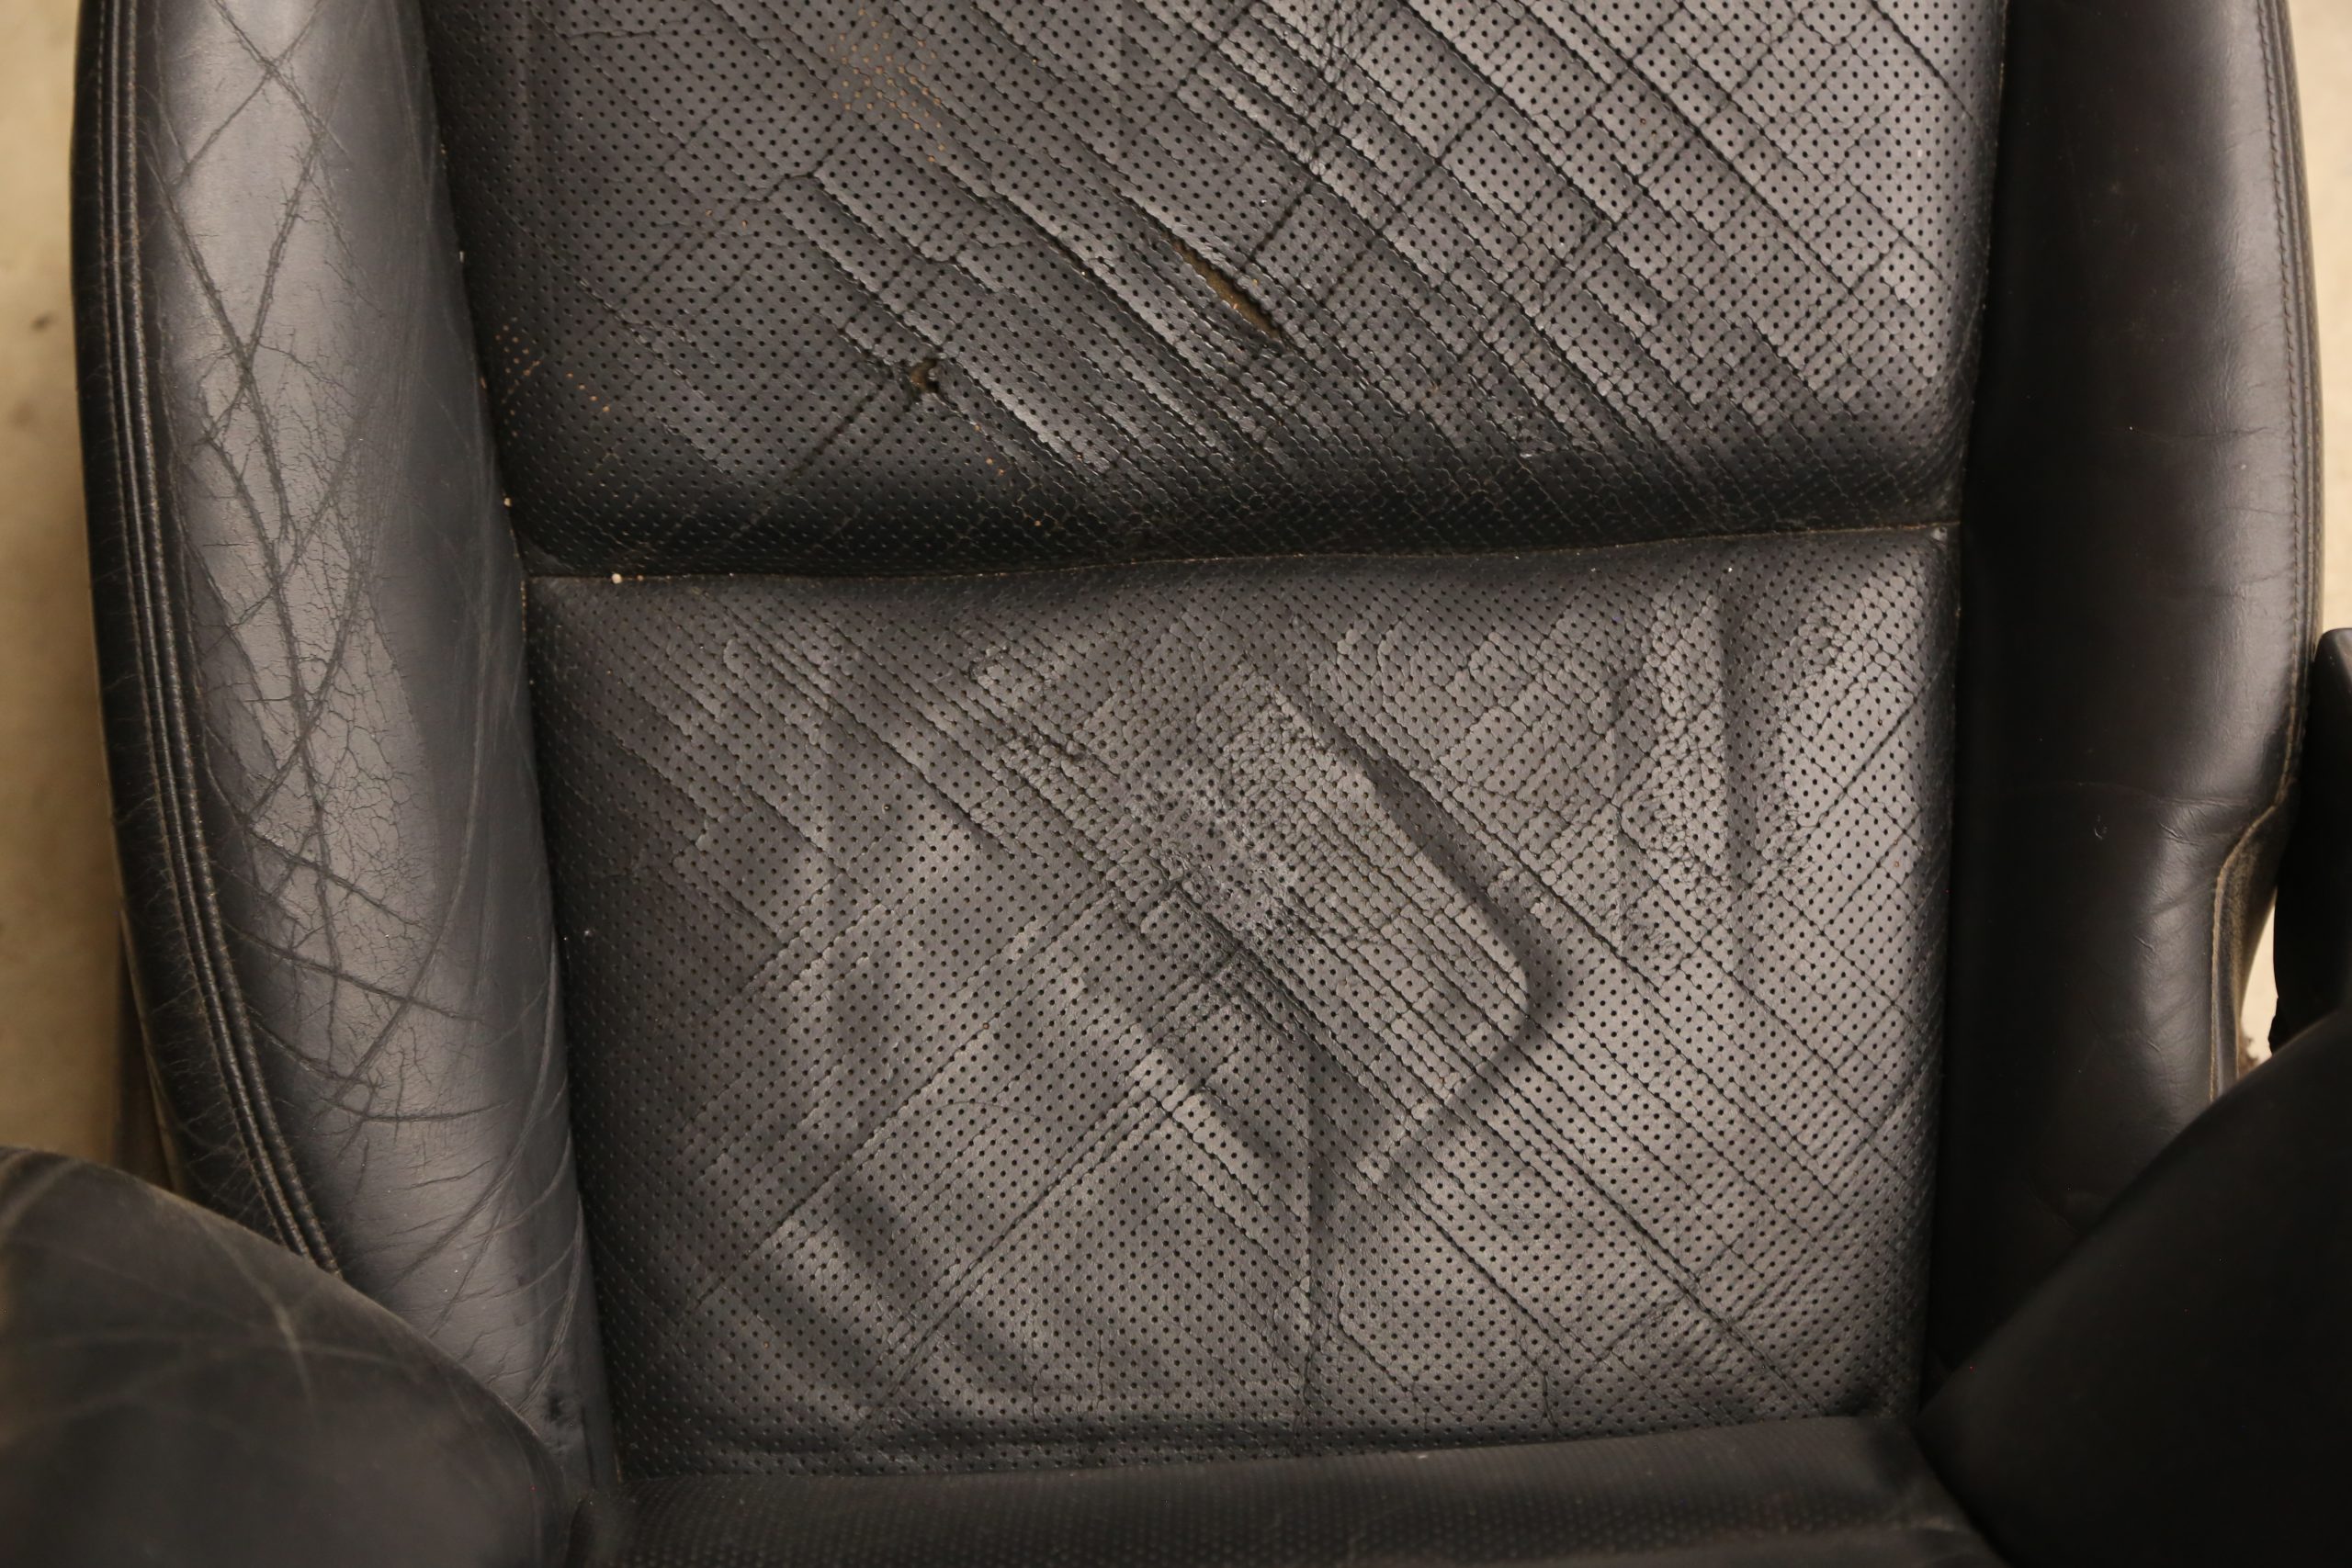 09-'13) - 2012 - Leather (actually vinyl) seat repair advice?